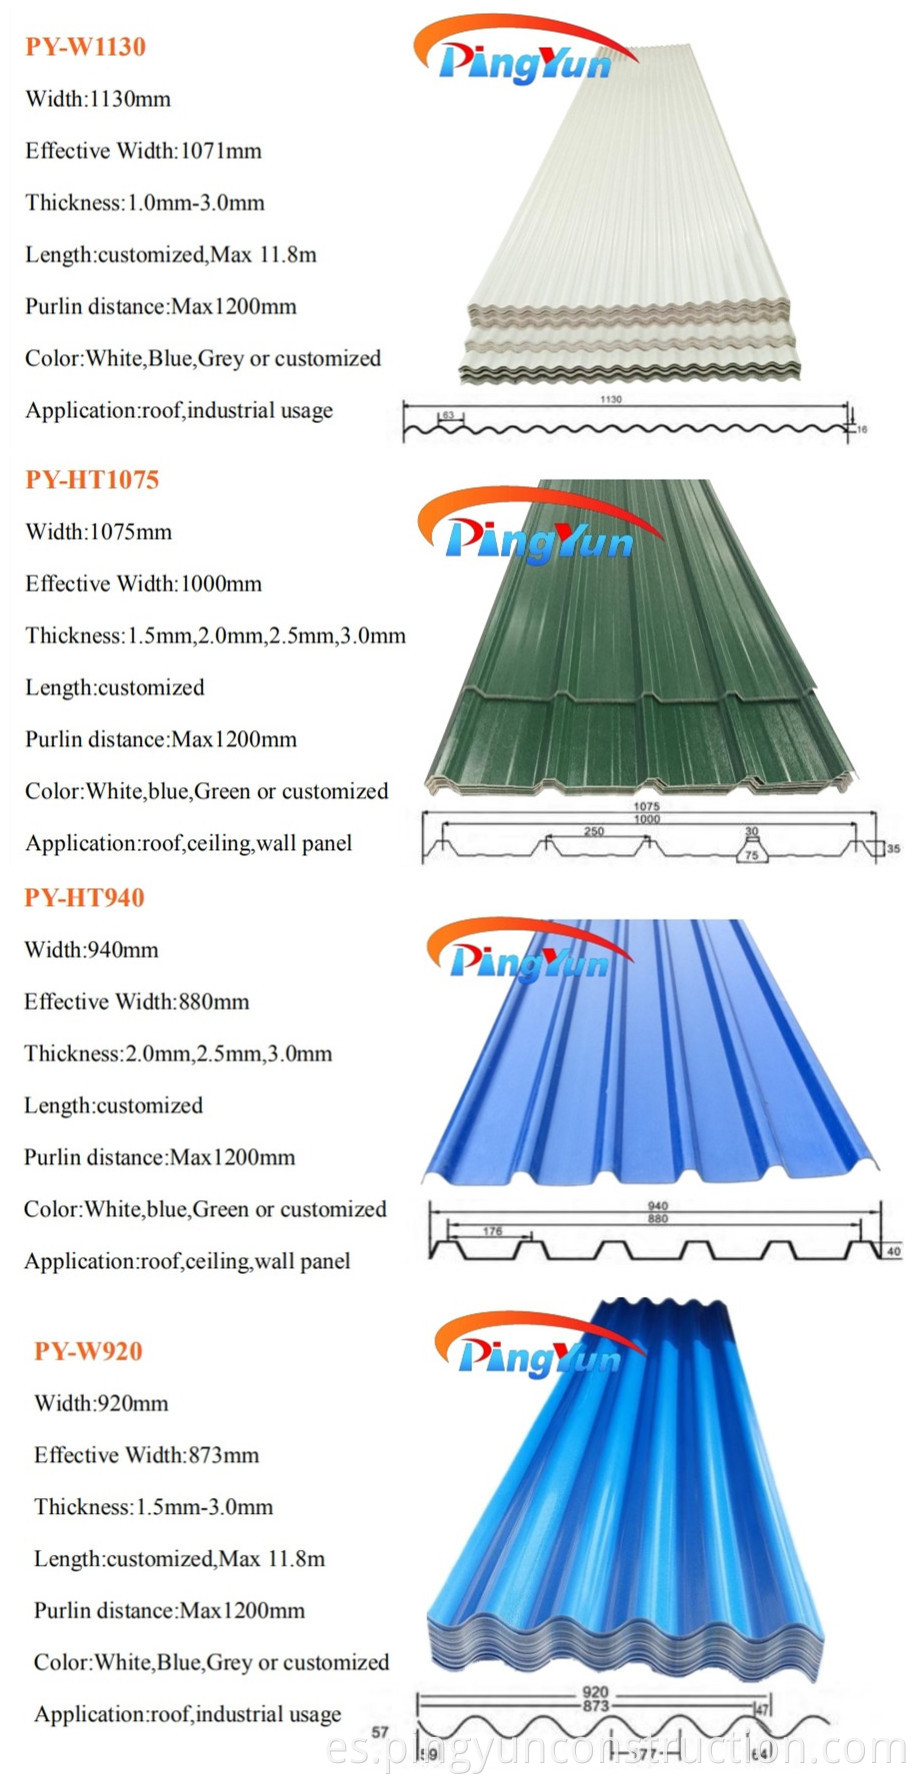 PINGYUN asa 1130 mm pvc roof tile